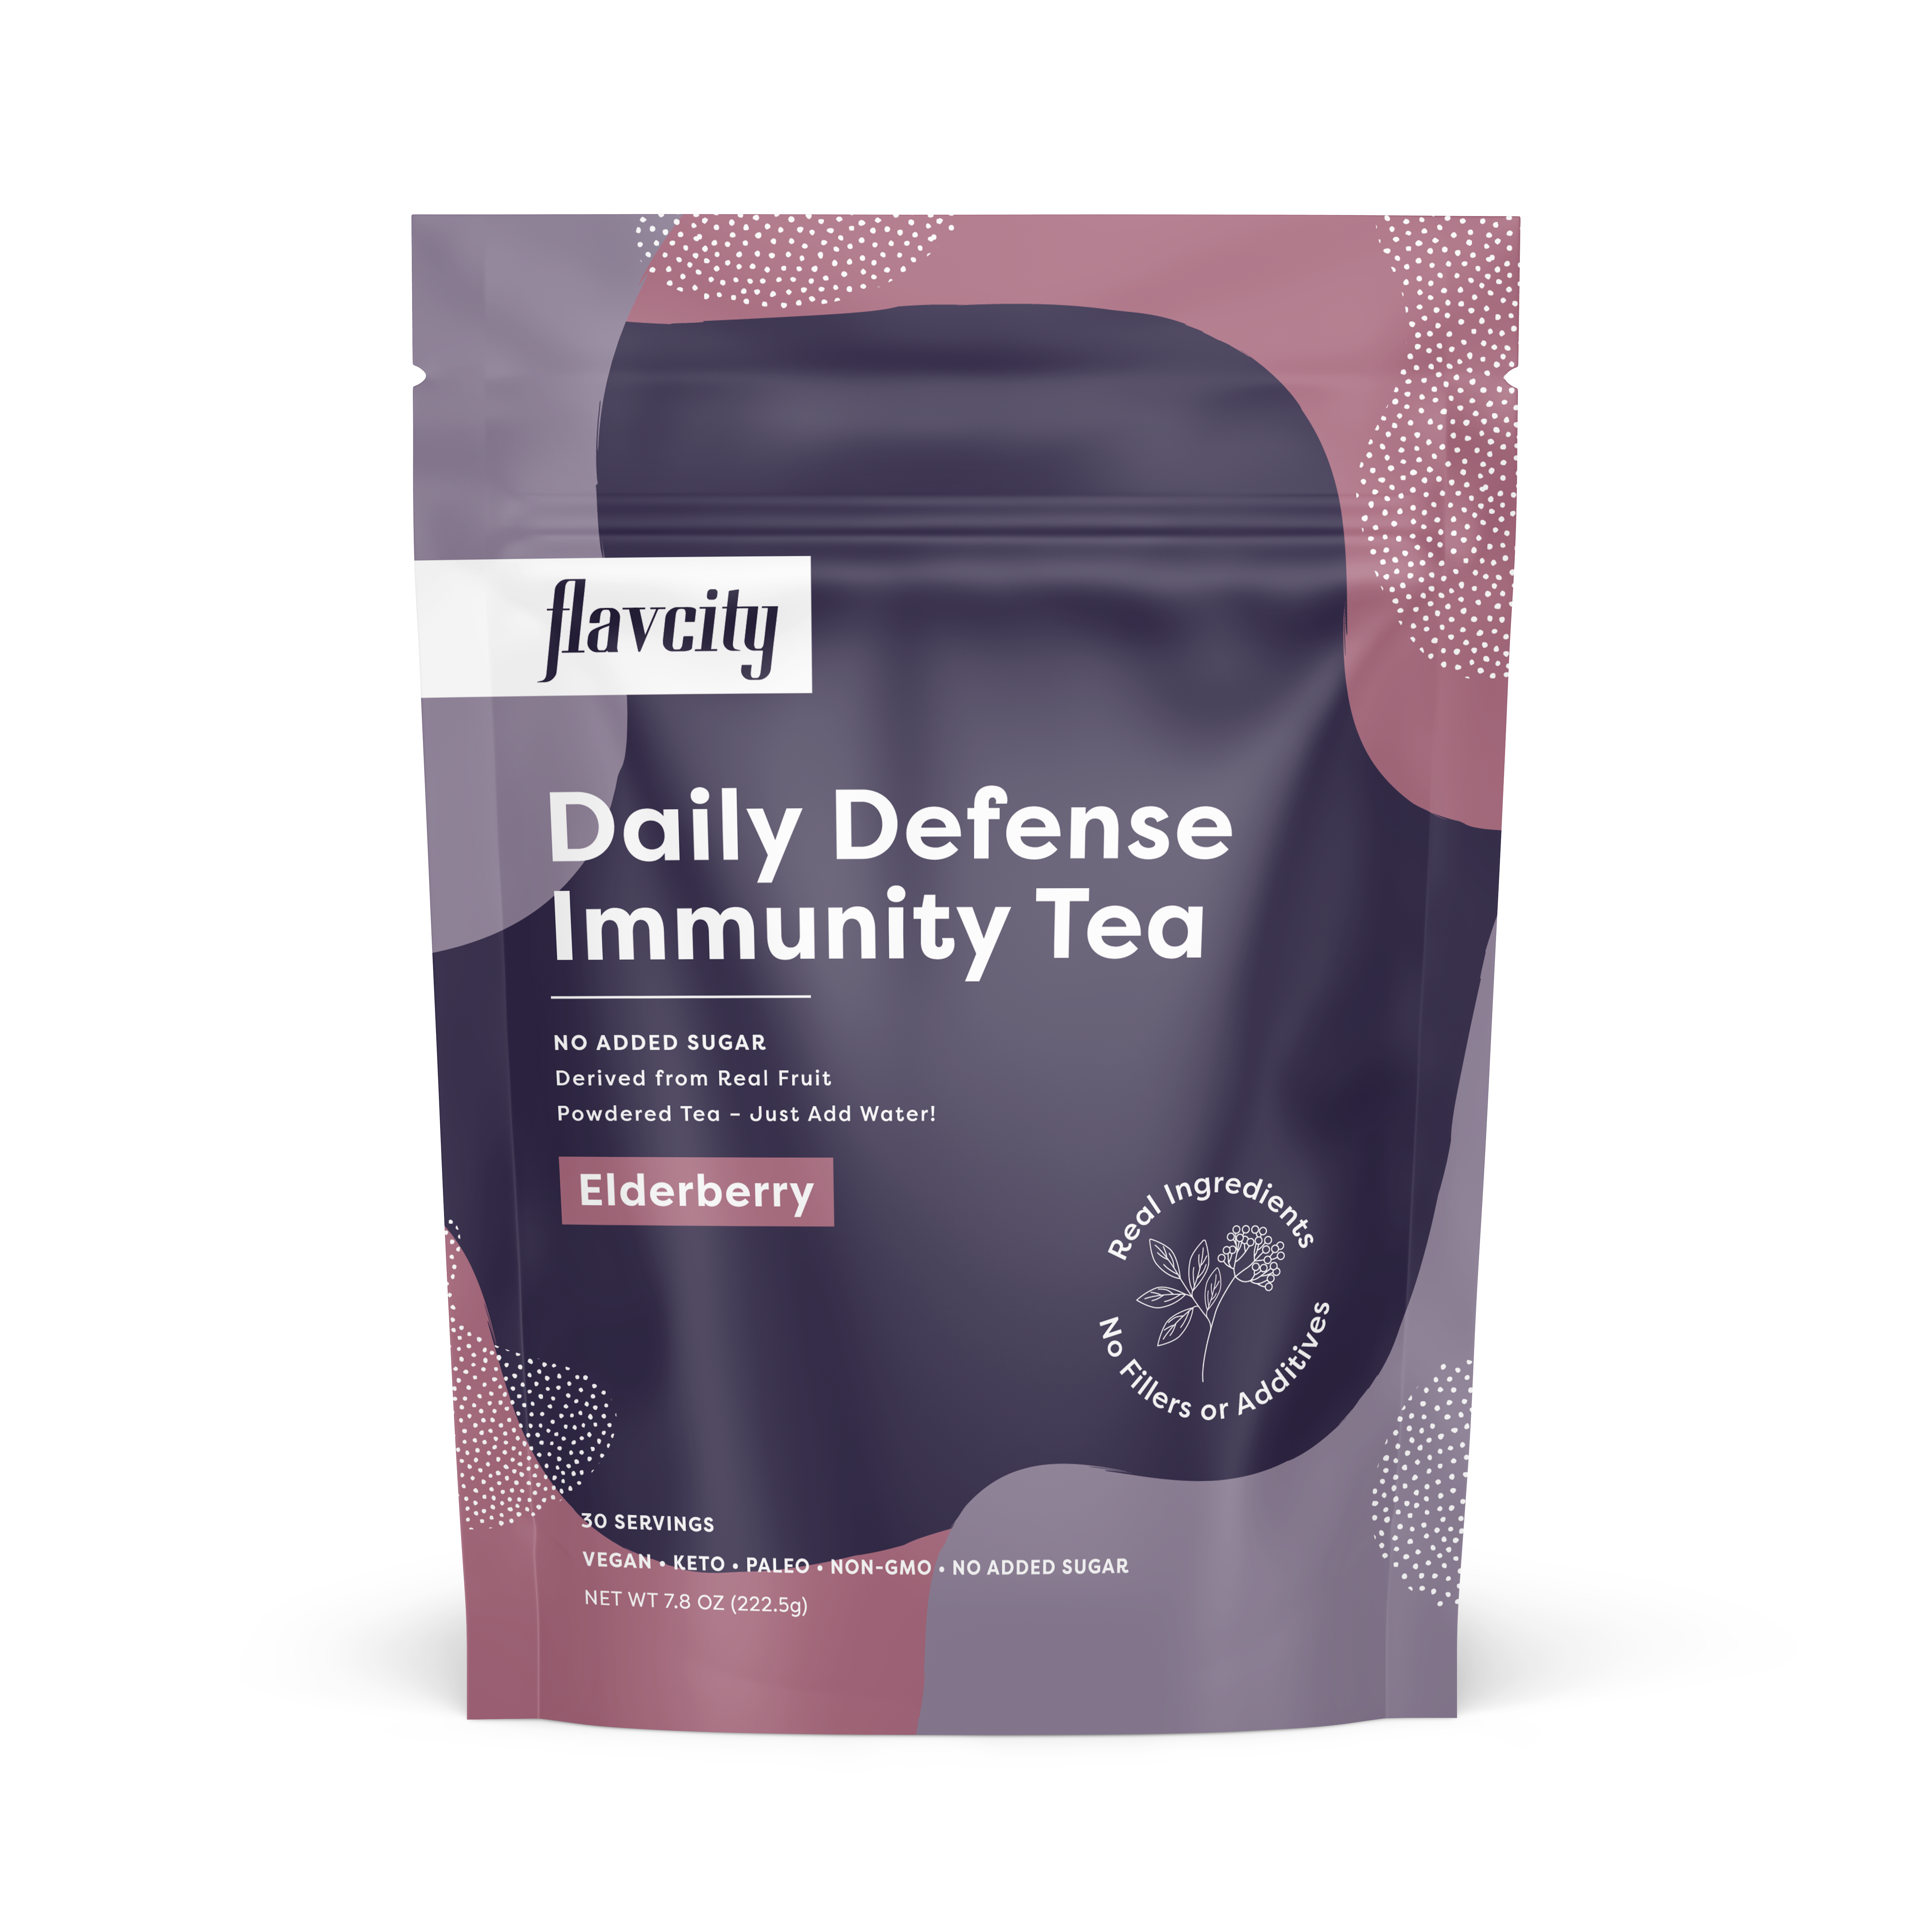 Flavcity Daily Defense Immunity Tea Front 2022